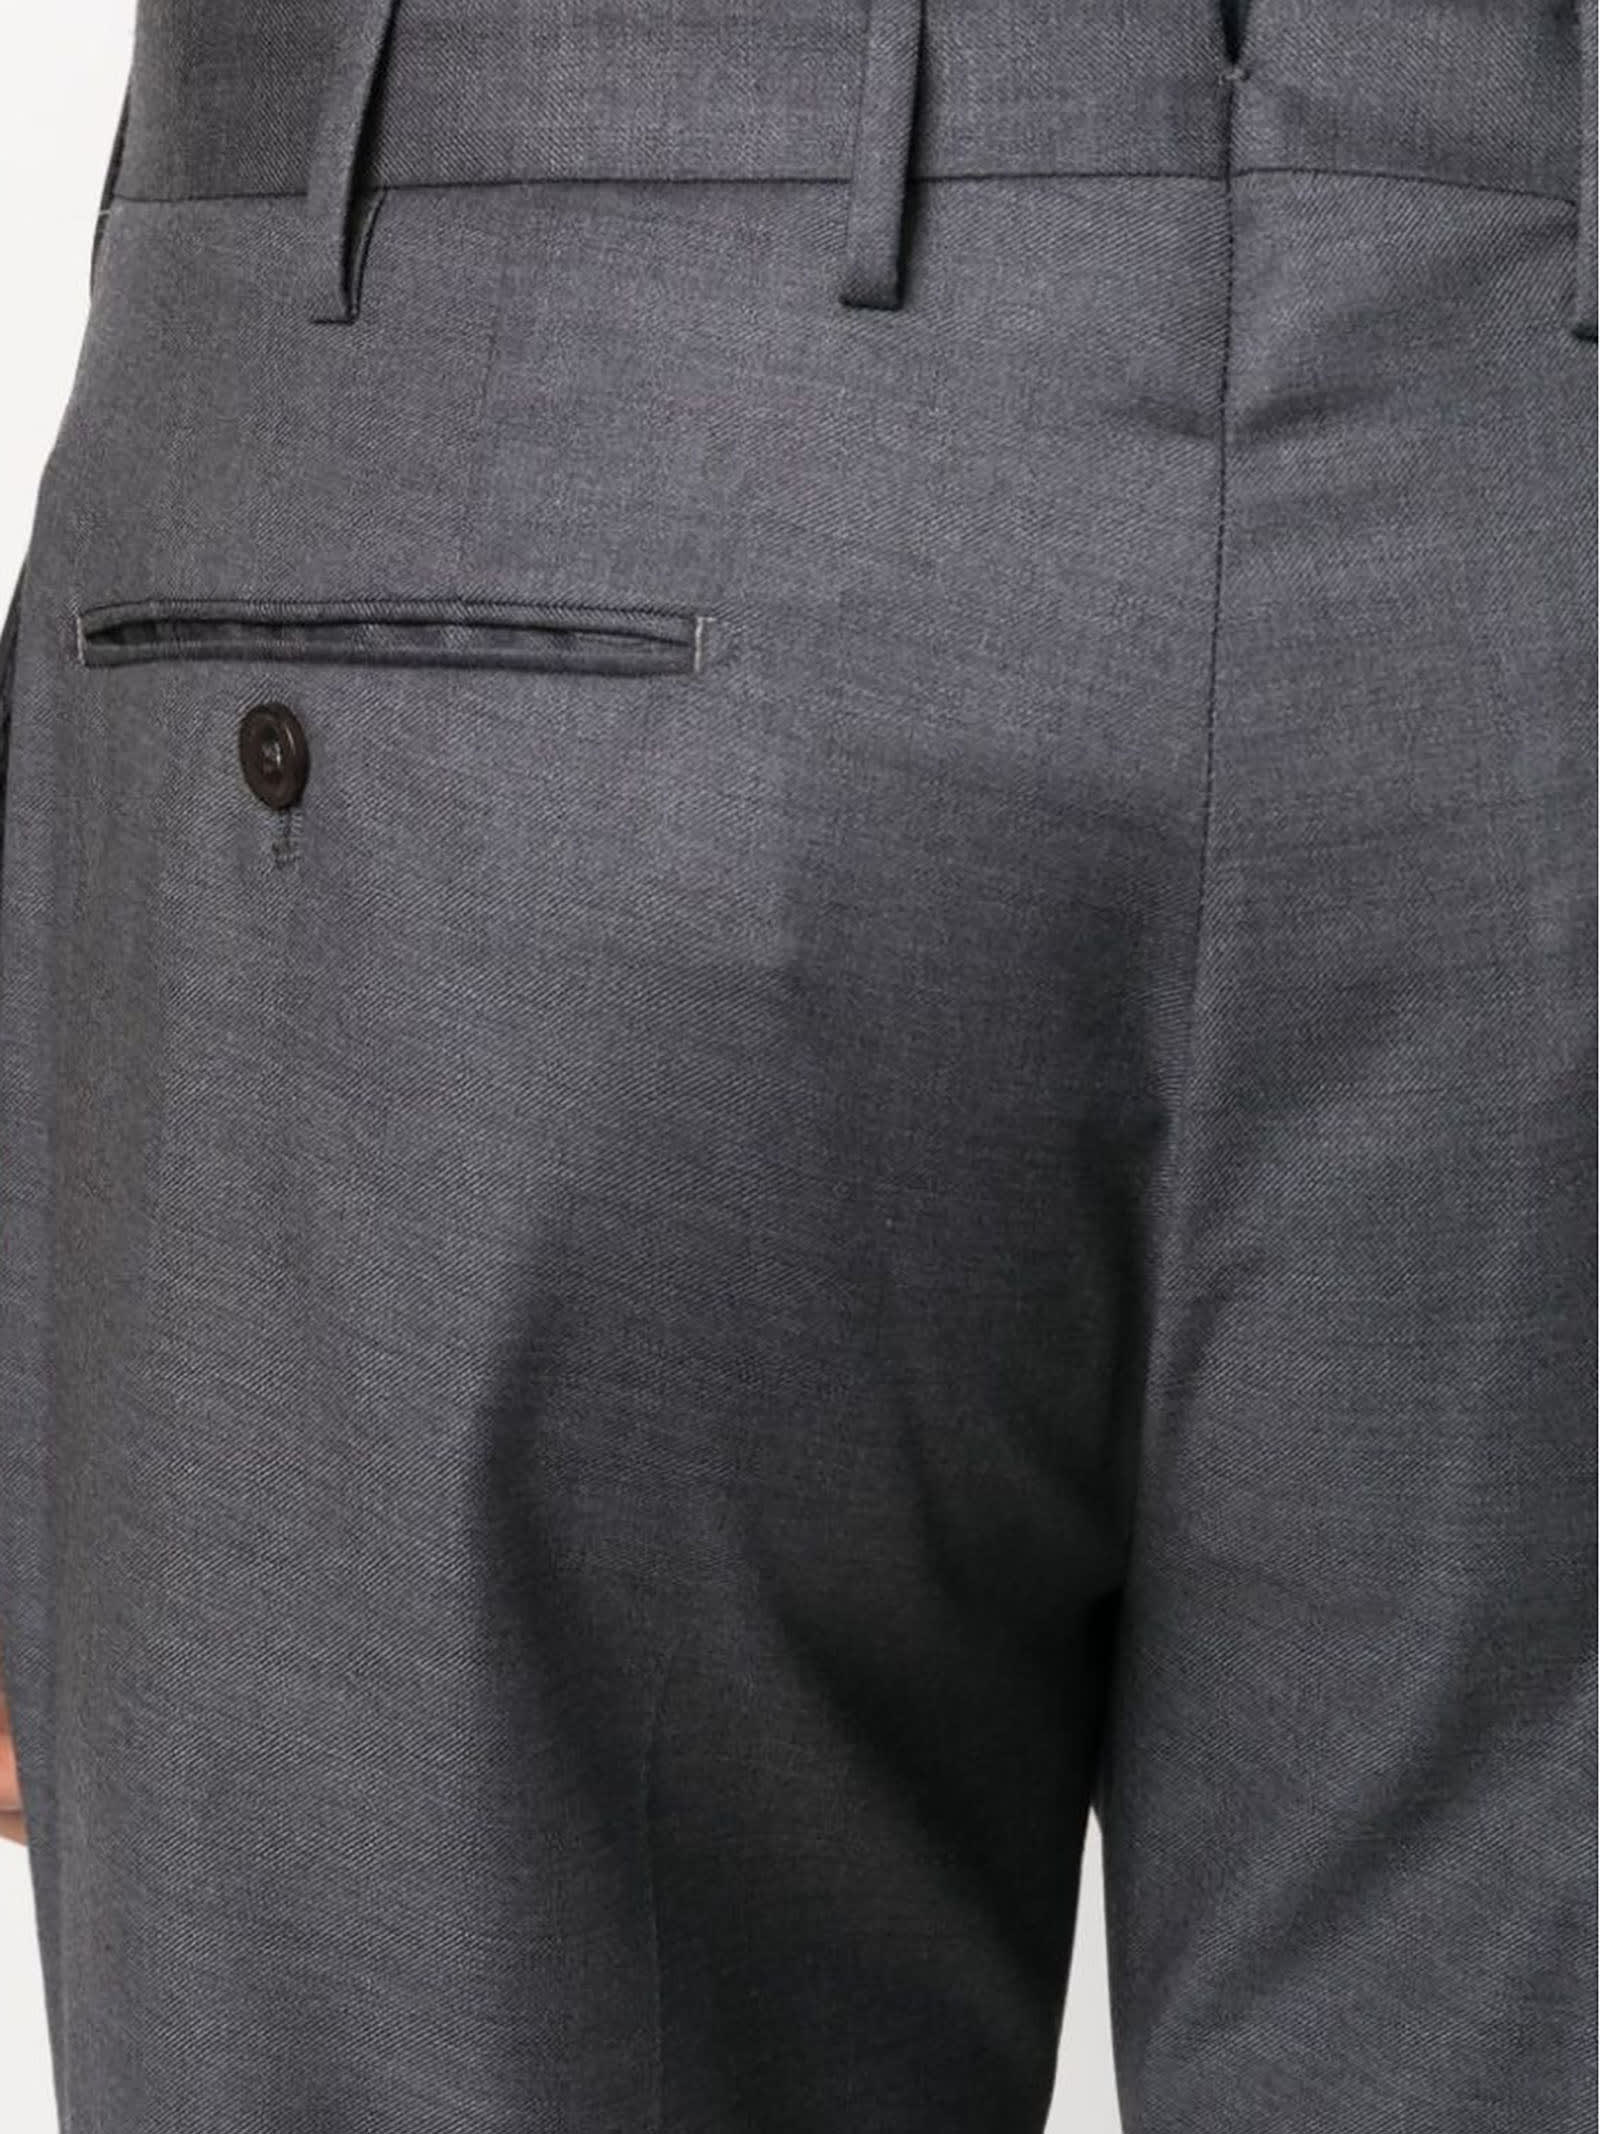 Shop Incotex Grey Virgin Wool Trousers